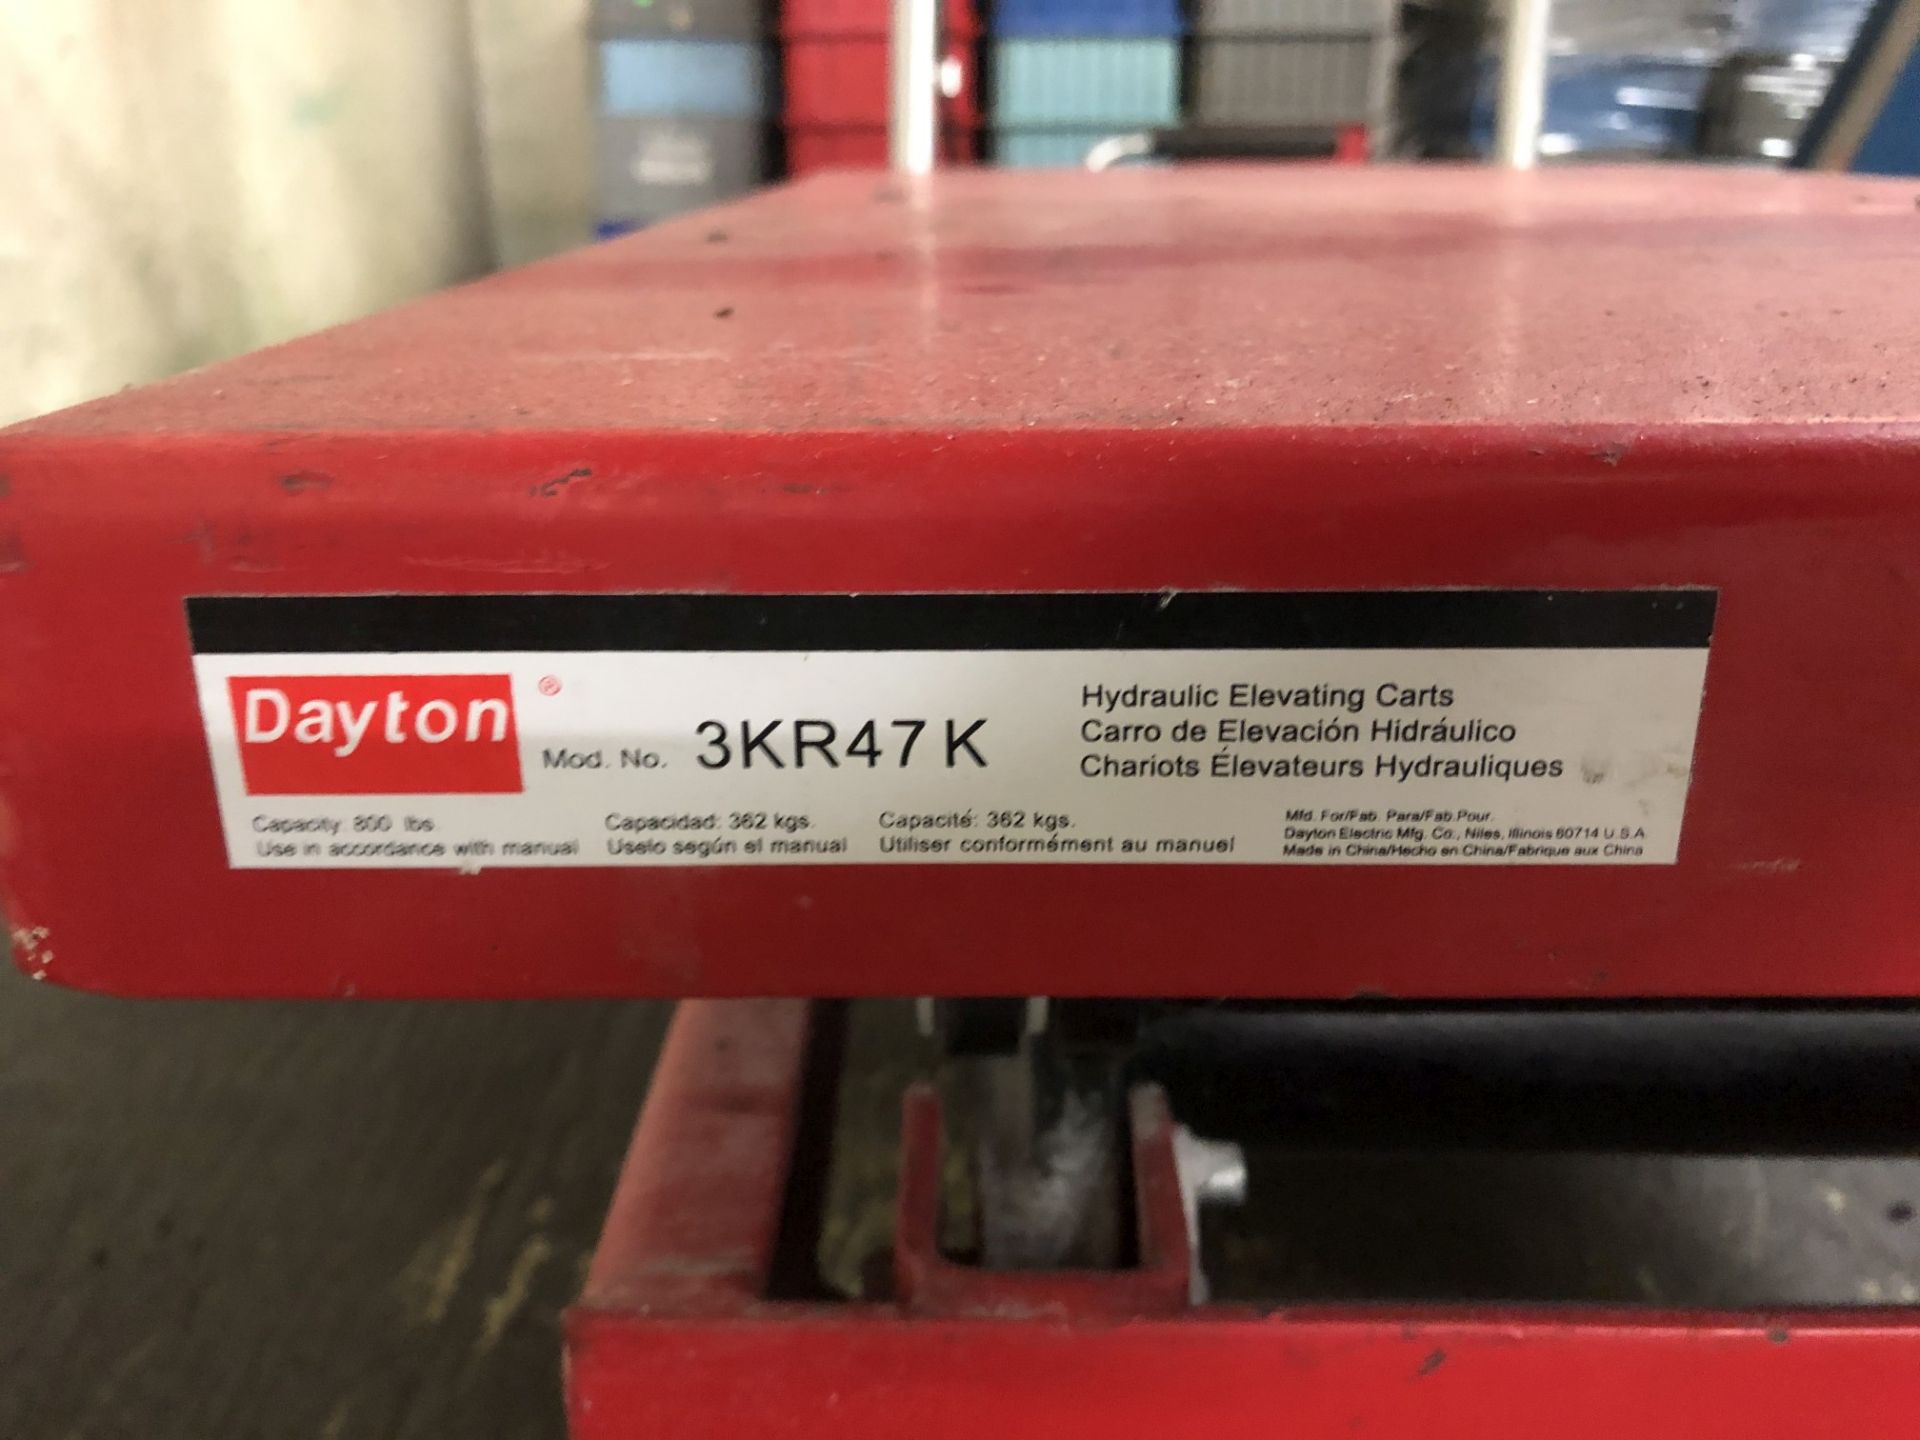 Dayton 800 Lb. Cap. Hydraulic Elevating Cart - Image 4 of 4